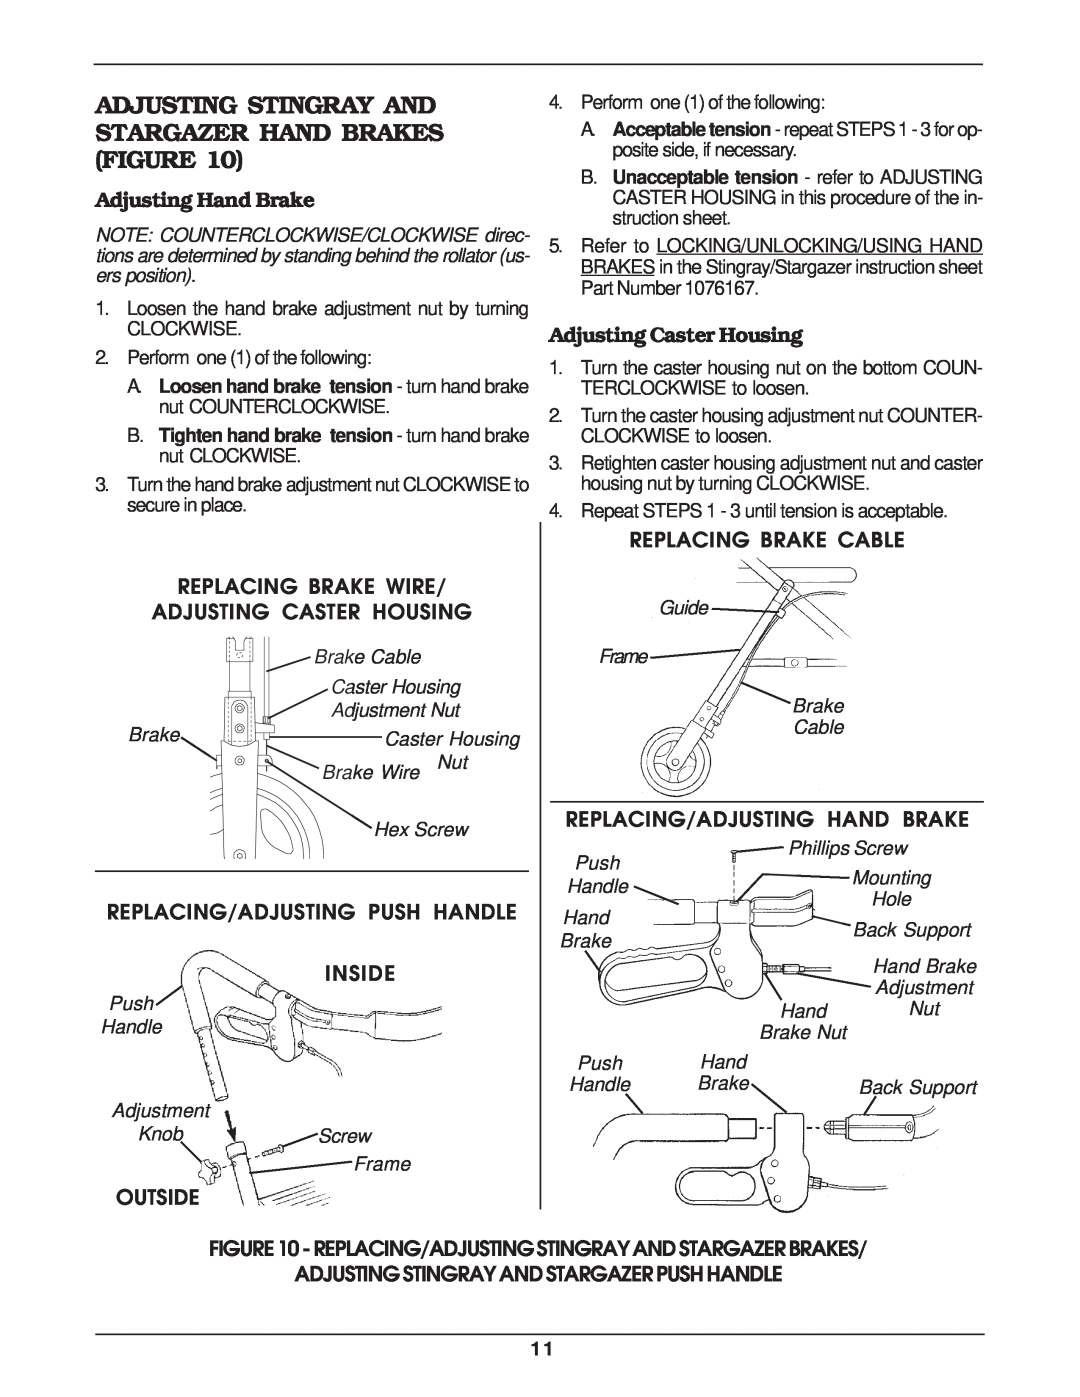 Invacare 65420 Adjusting Stingray And Stargazer Hand Brakes Figure, Adjusting Hand Brake, Adjusting Caster Housing, Inside 